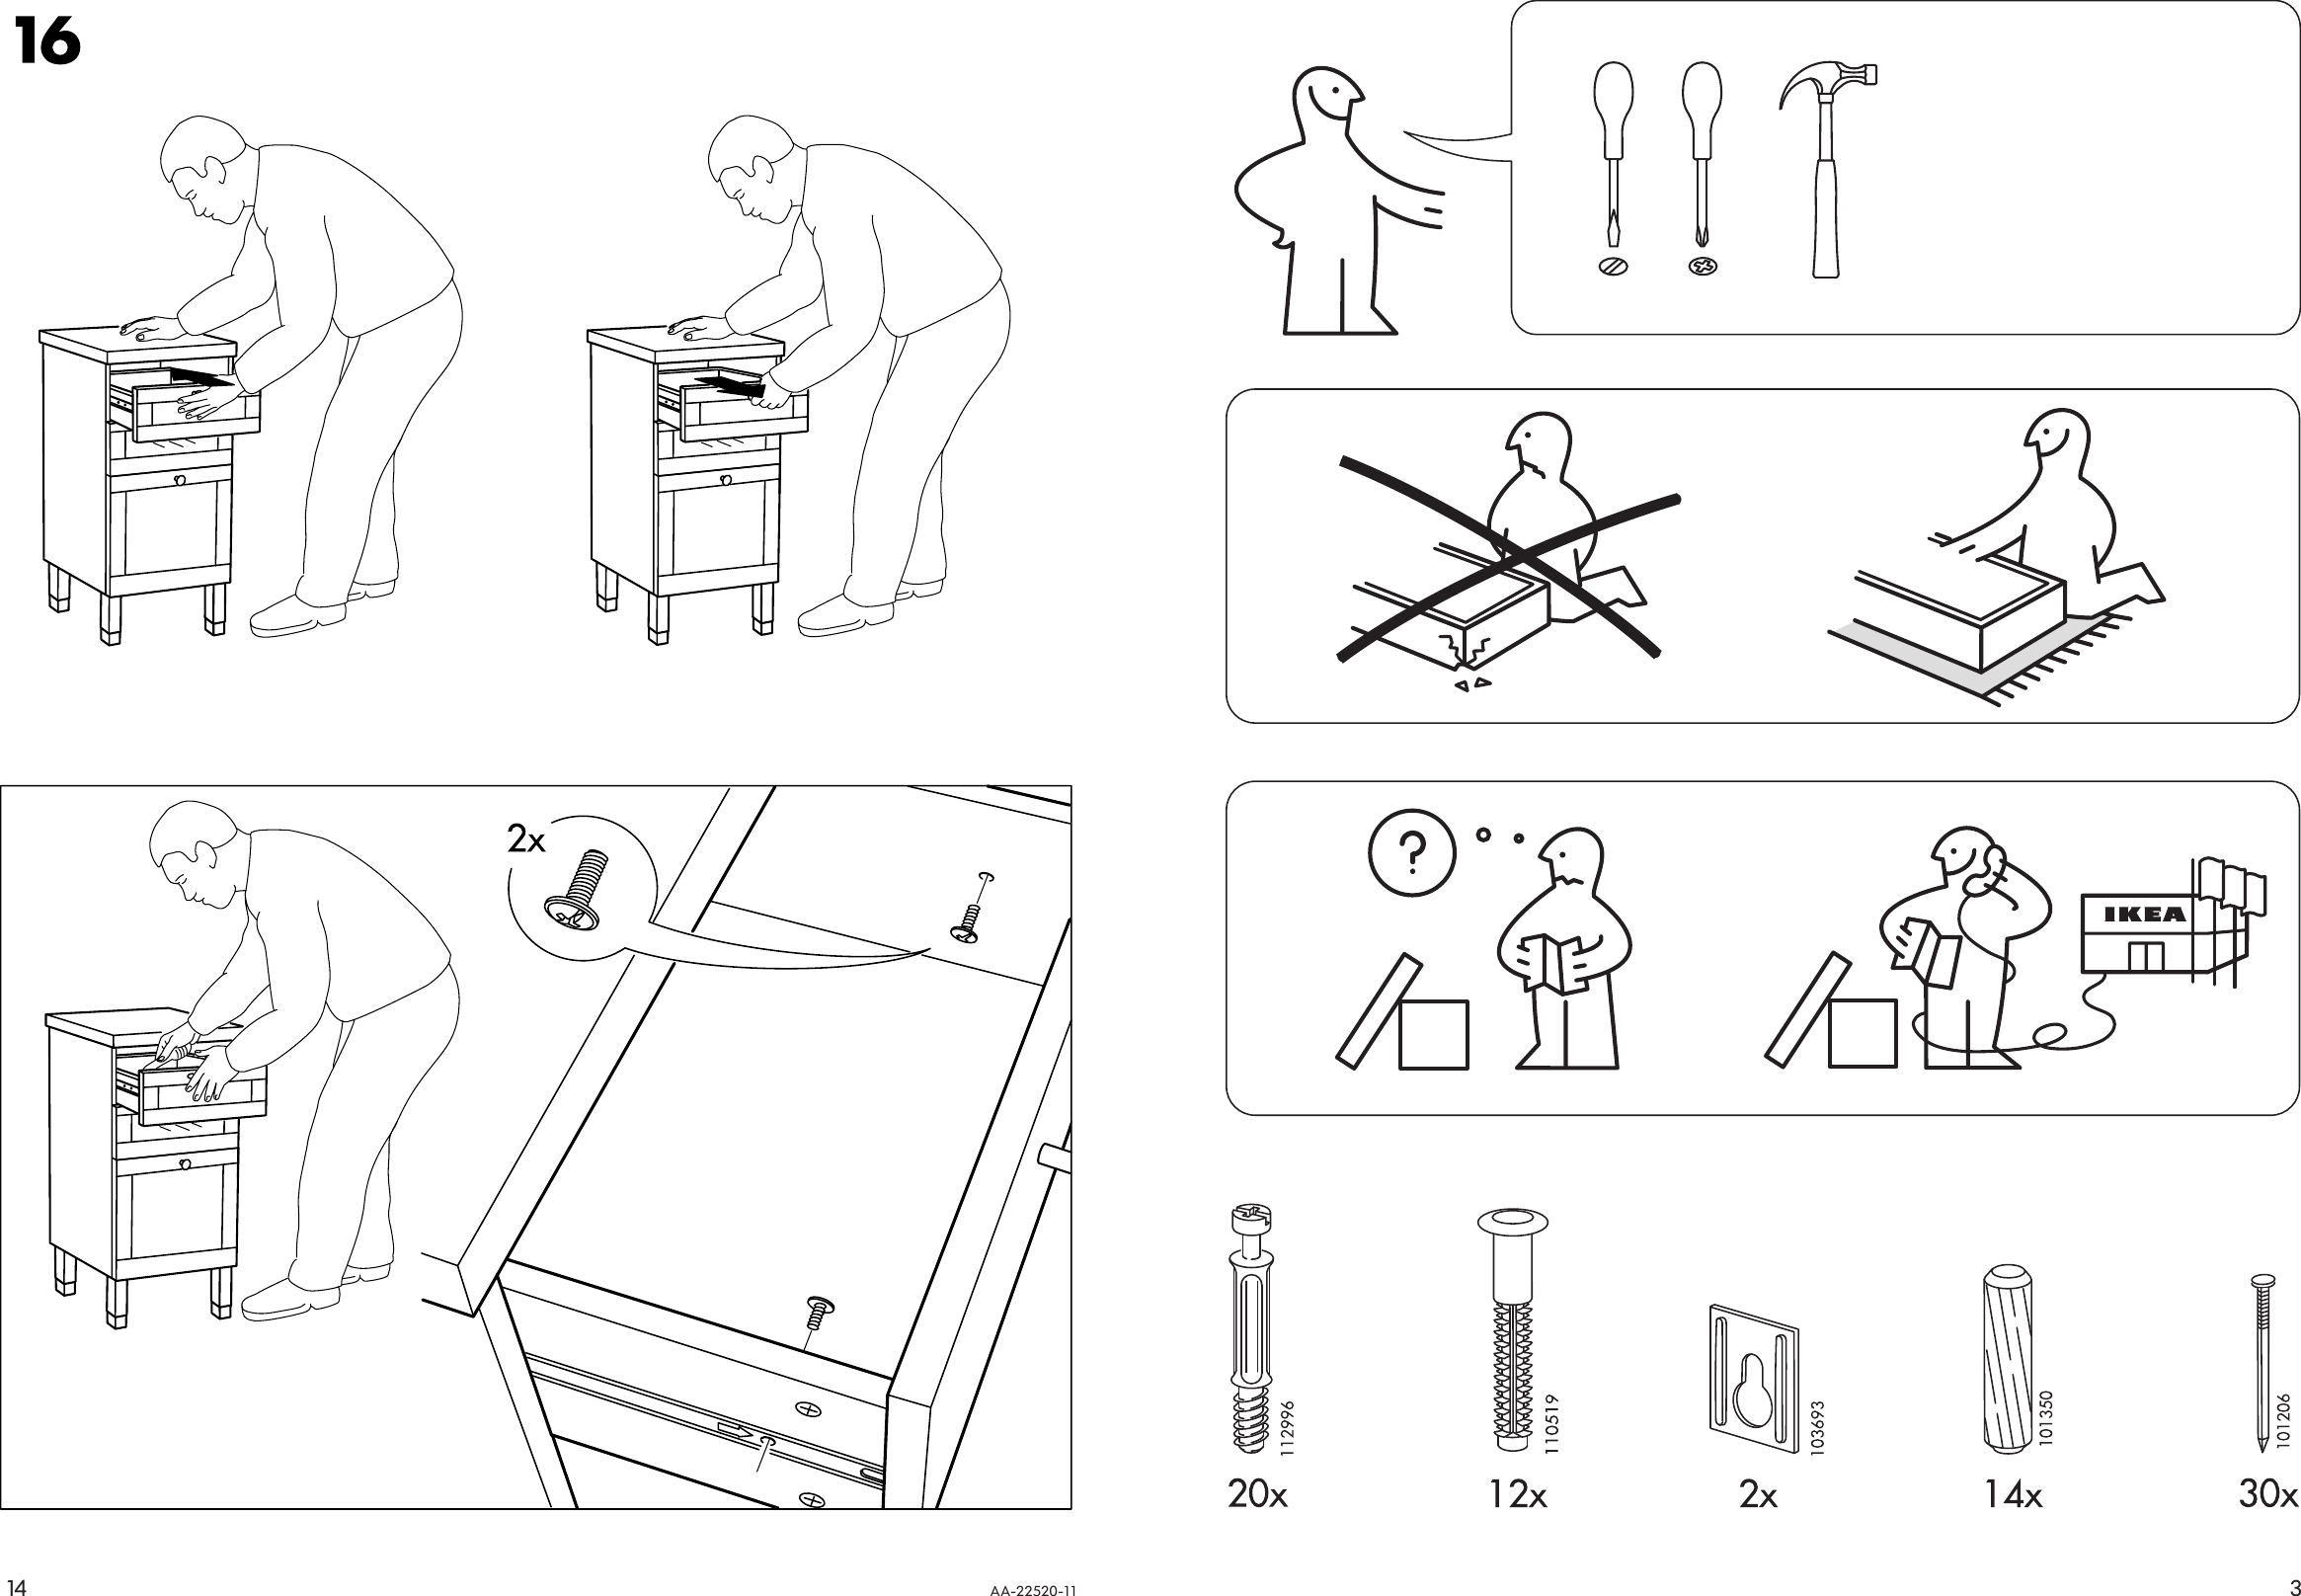 IkeaStenskarDrawUnitAssemblyInstruction.1313043034 User Guide Page 3 